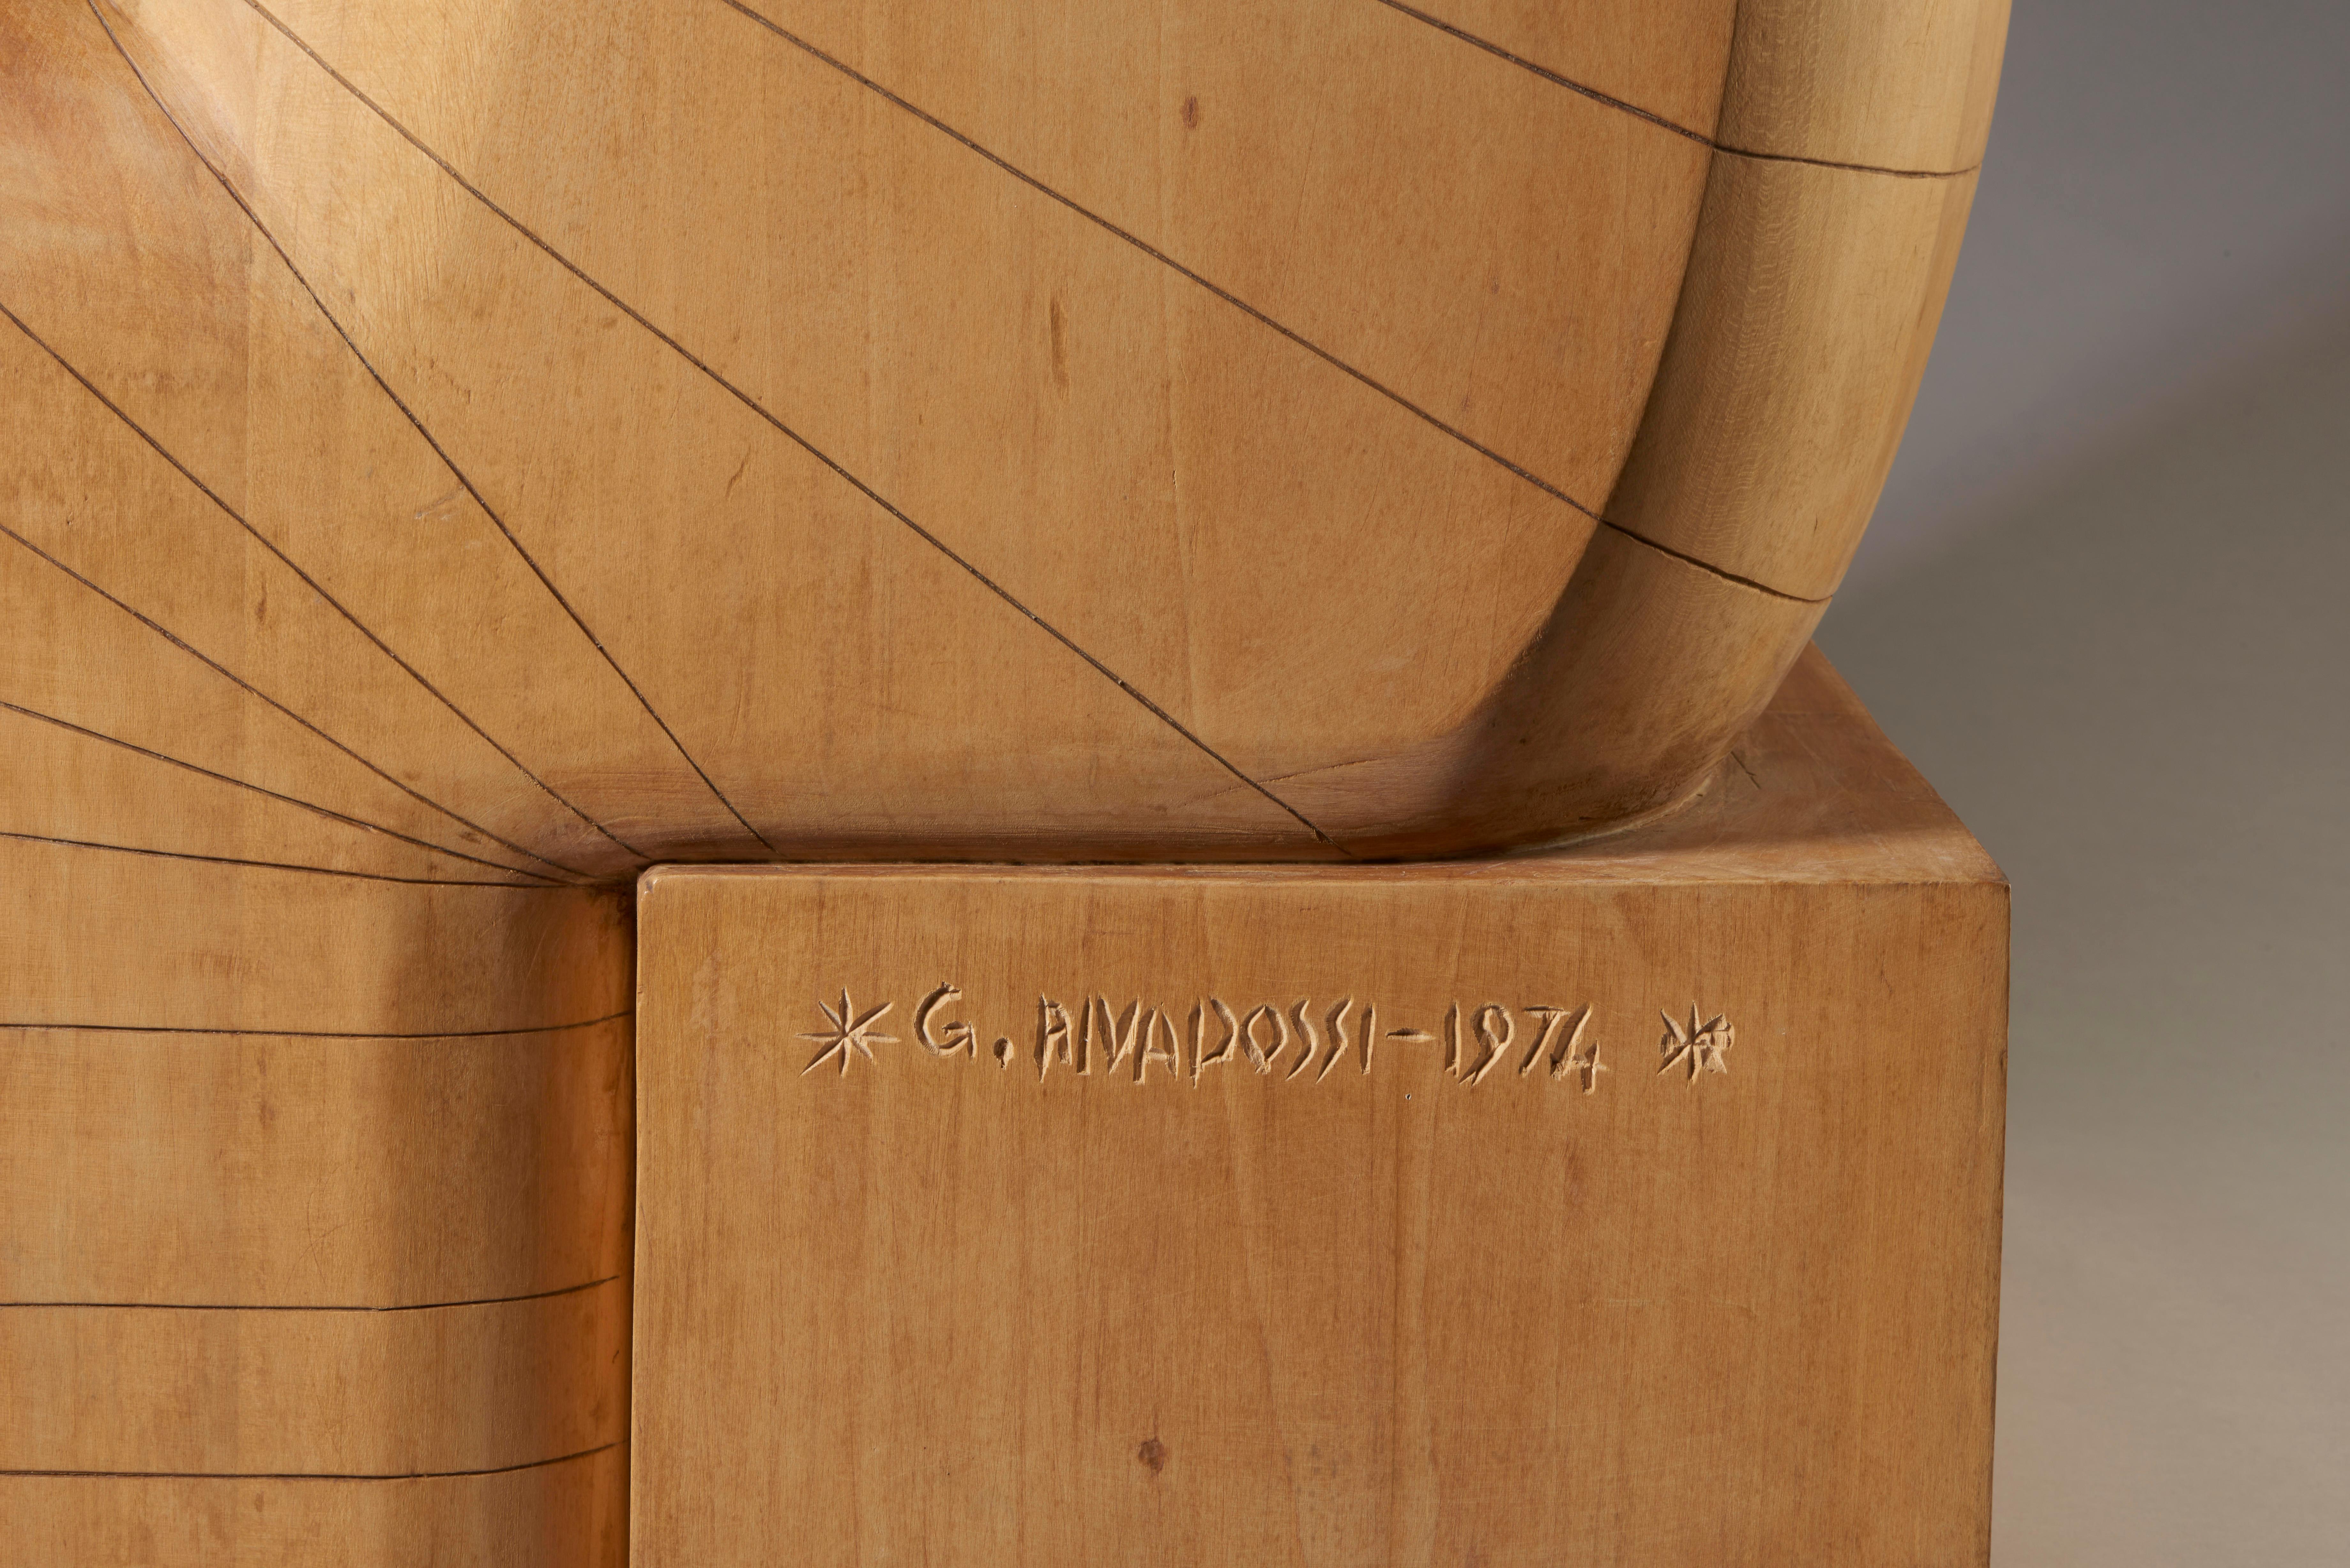 Giuseppe Rivadossi (Nave, 8 juillet 1935)  Hangar, 1974 Sculpture en bois en vente 3